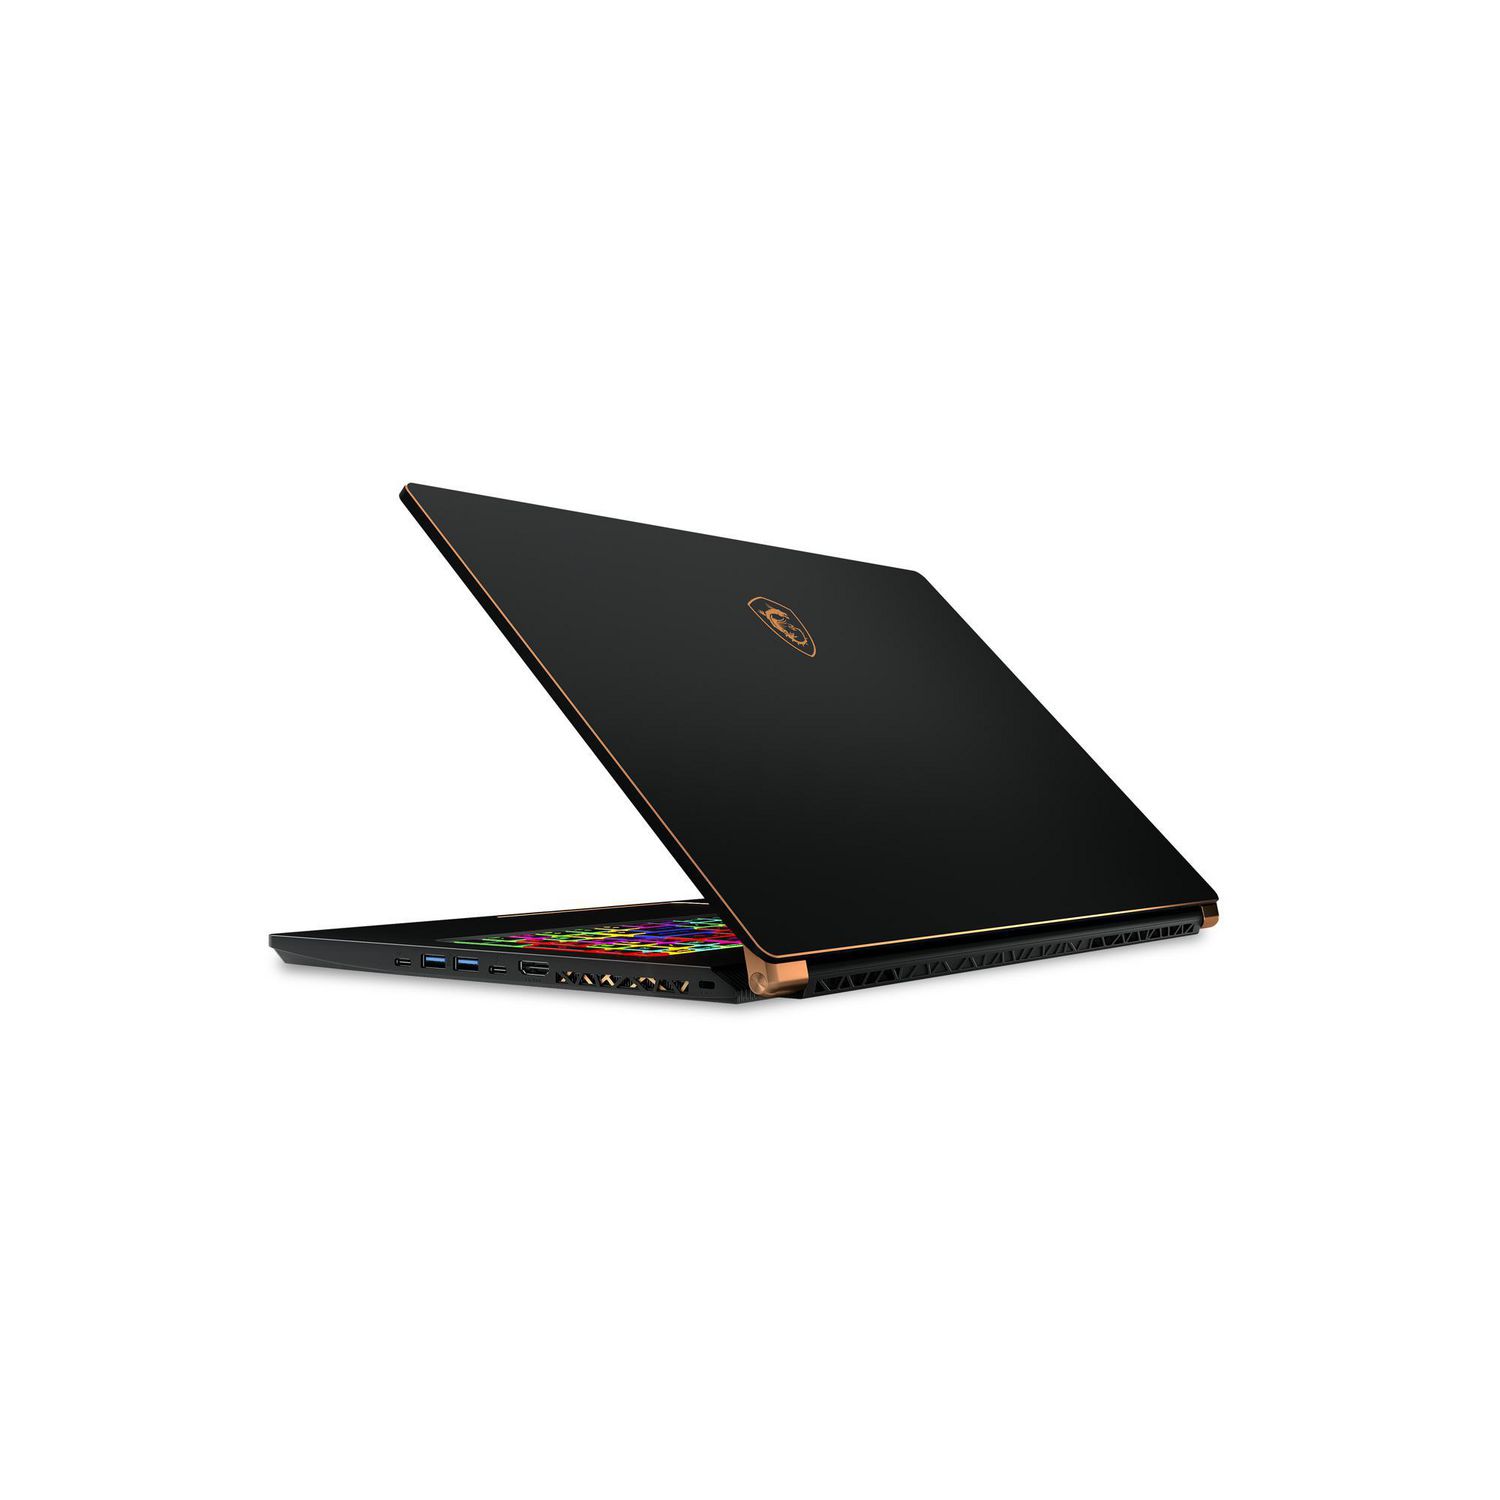 Windows 10 PRO Gaming Laptop MSI GS75 8SE-020CA Stealth i7-8750 RTX2060 16GB 512GSSD